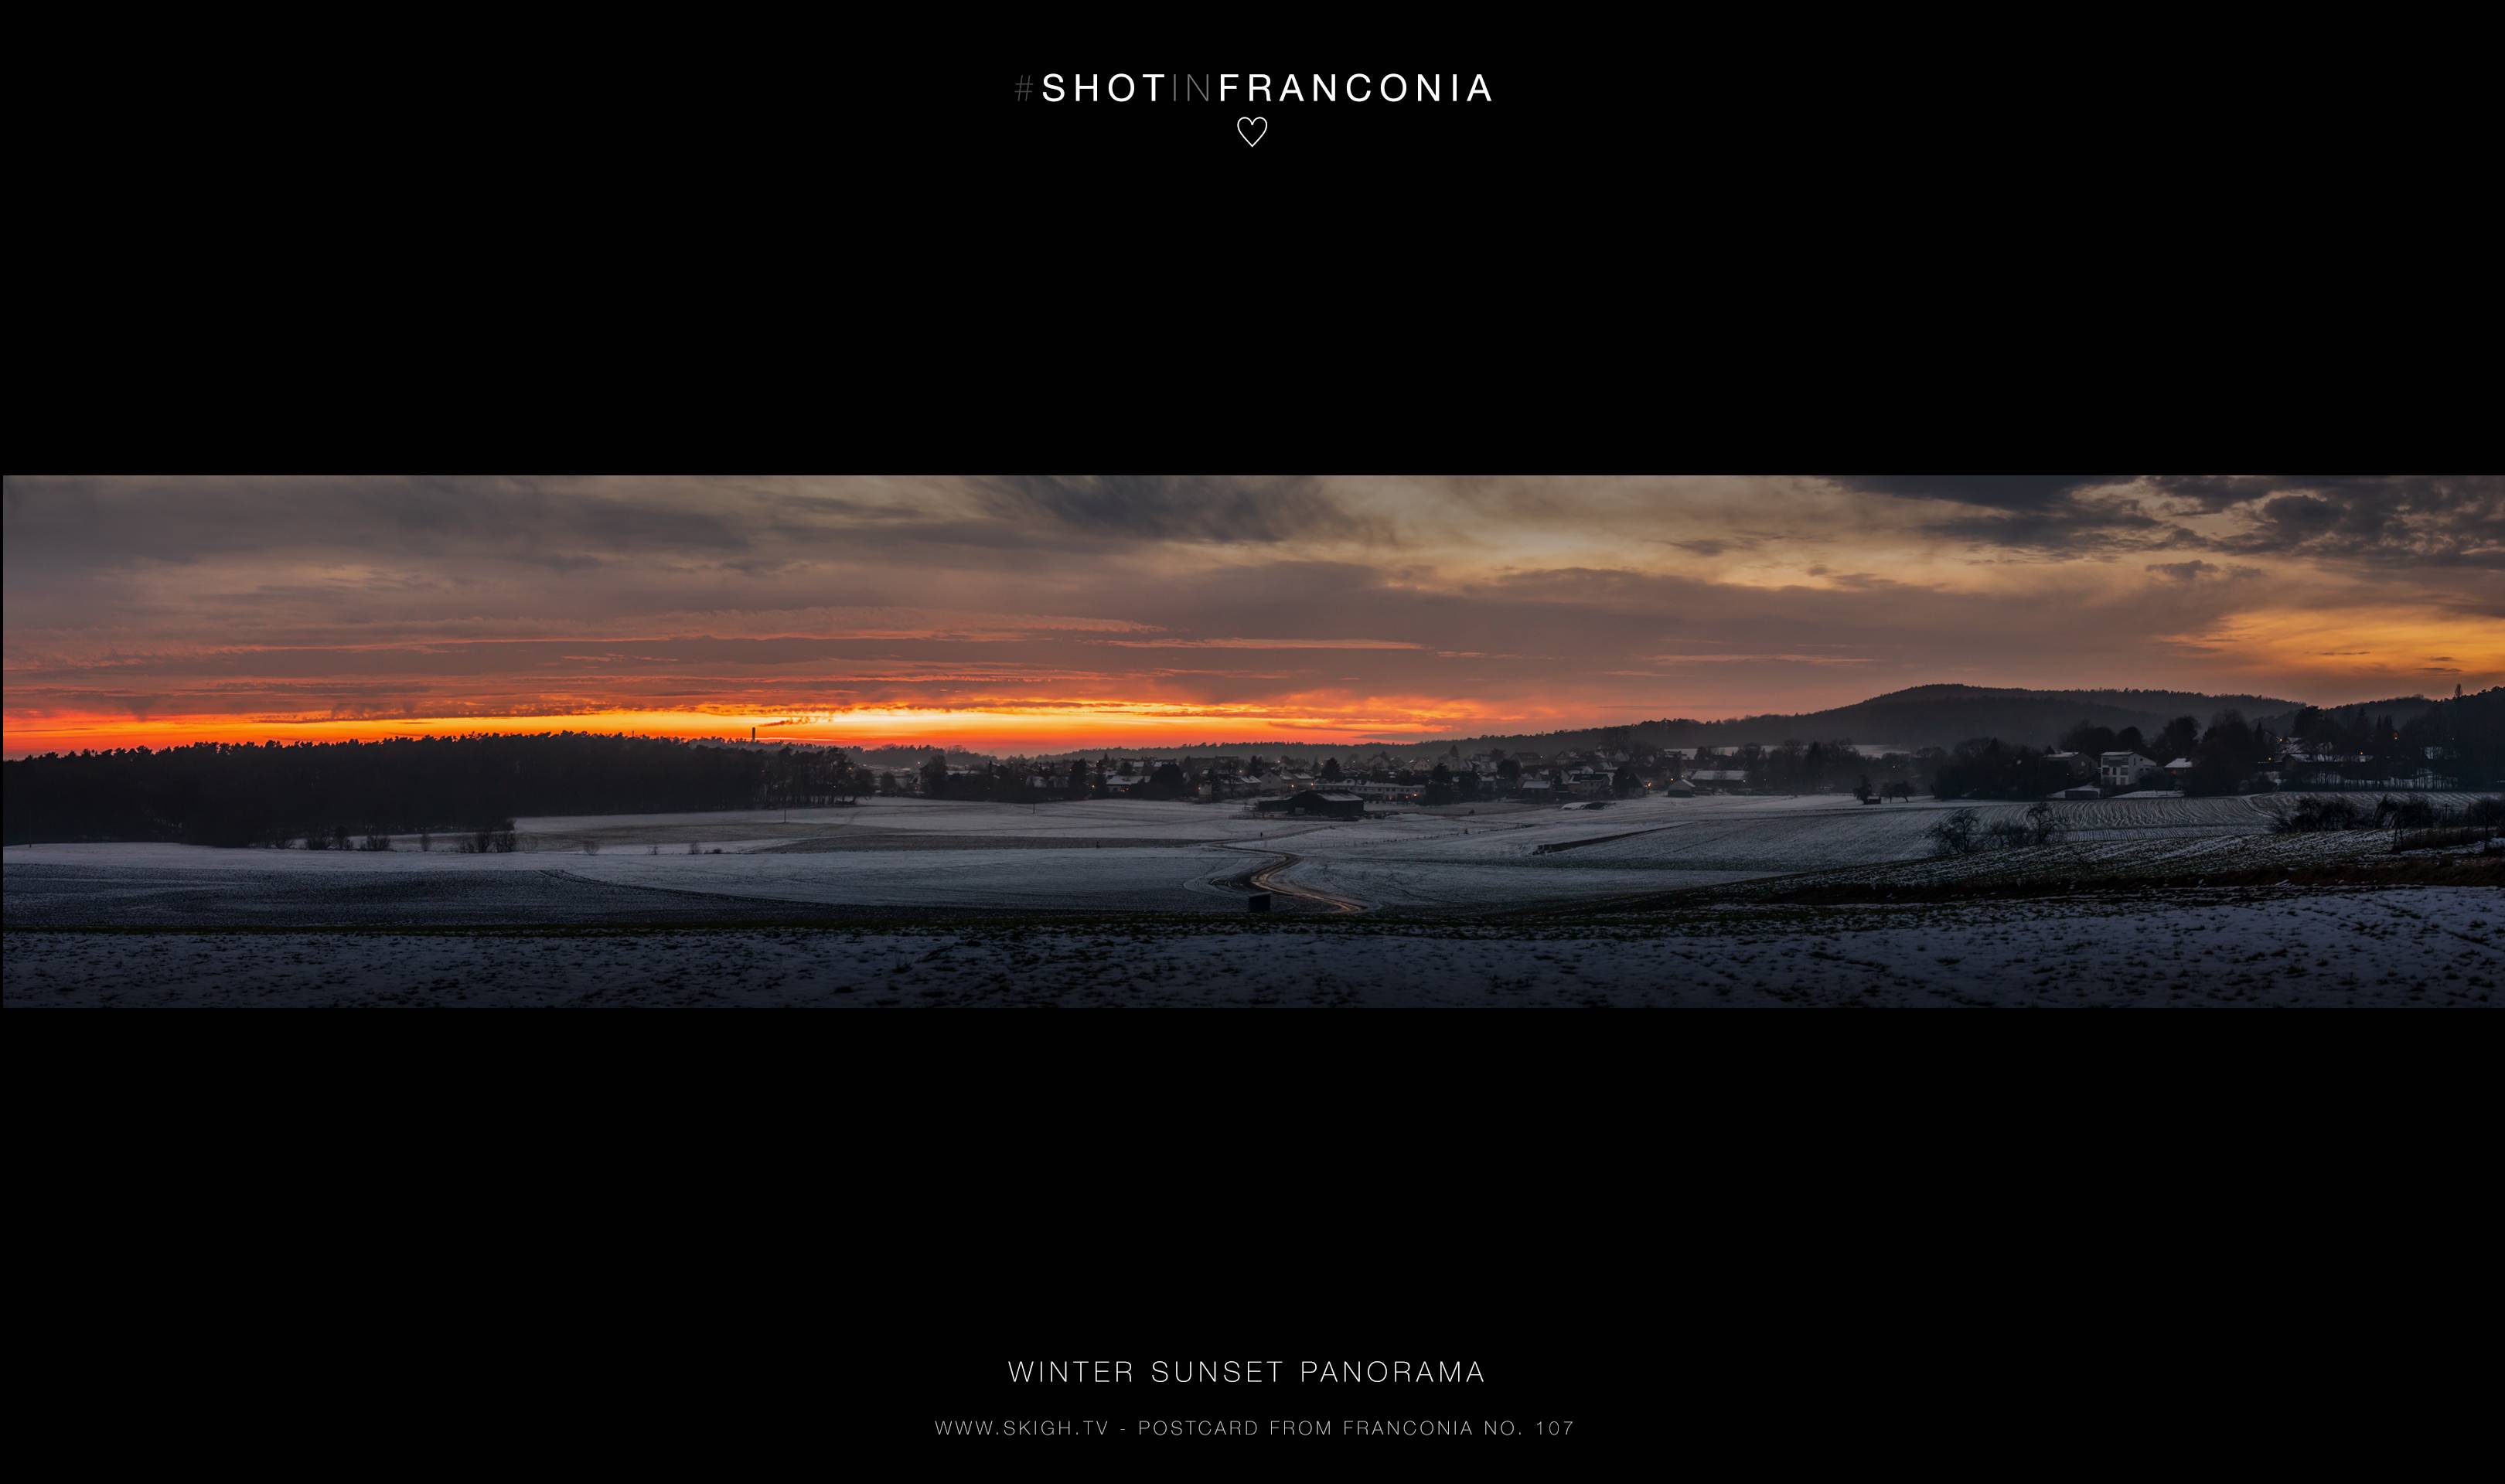 Winter sunset panorama